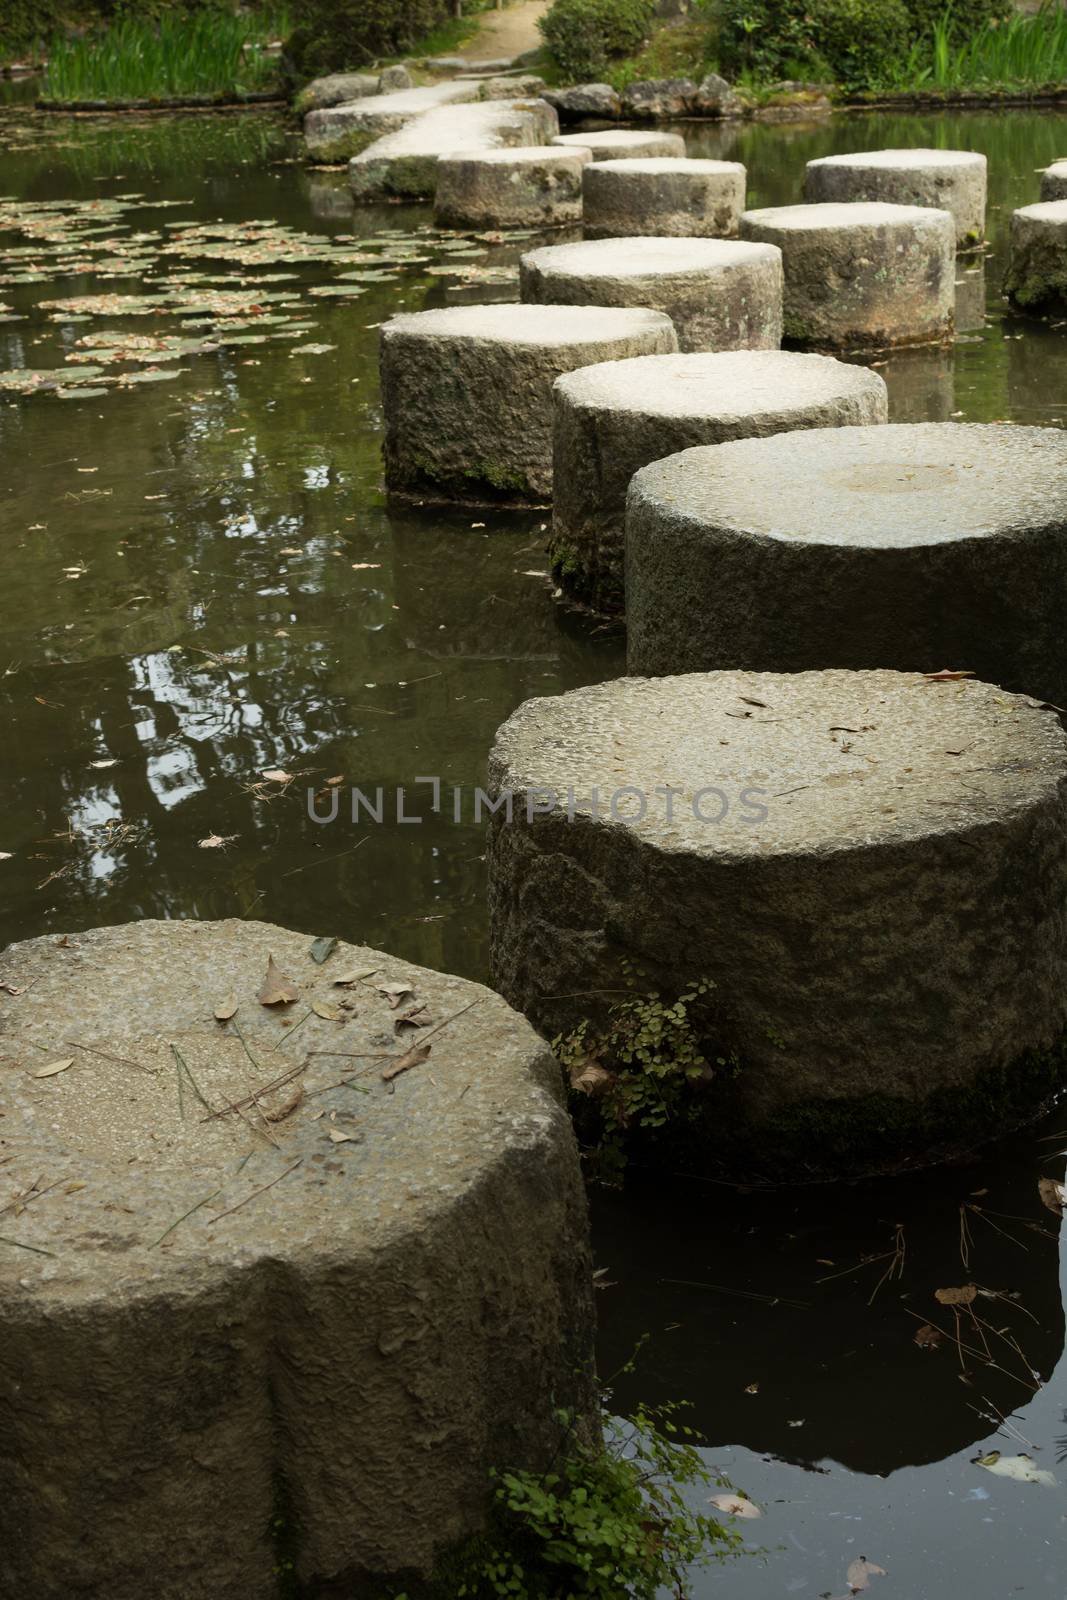 Zen stone path in a Japanese garden near Heian Shrine